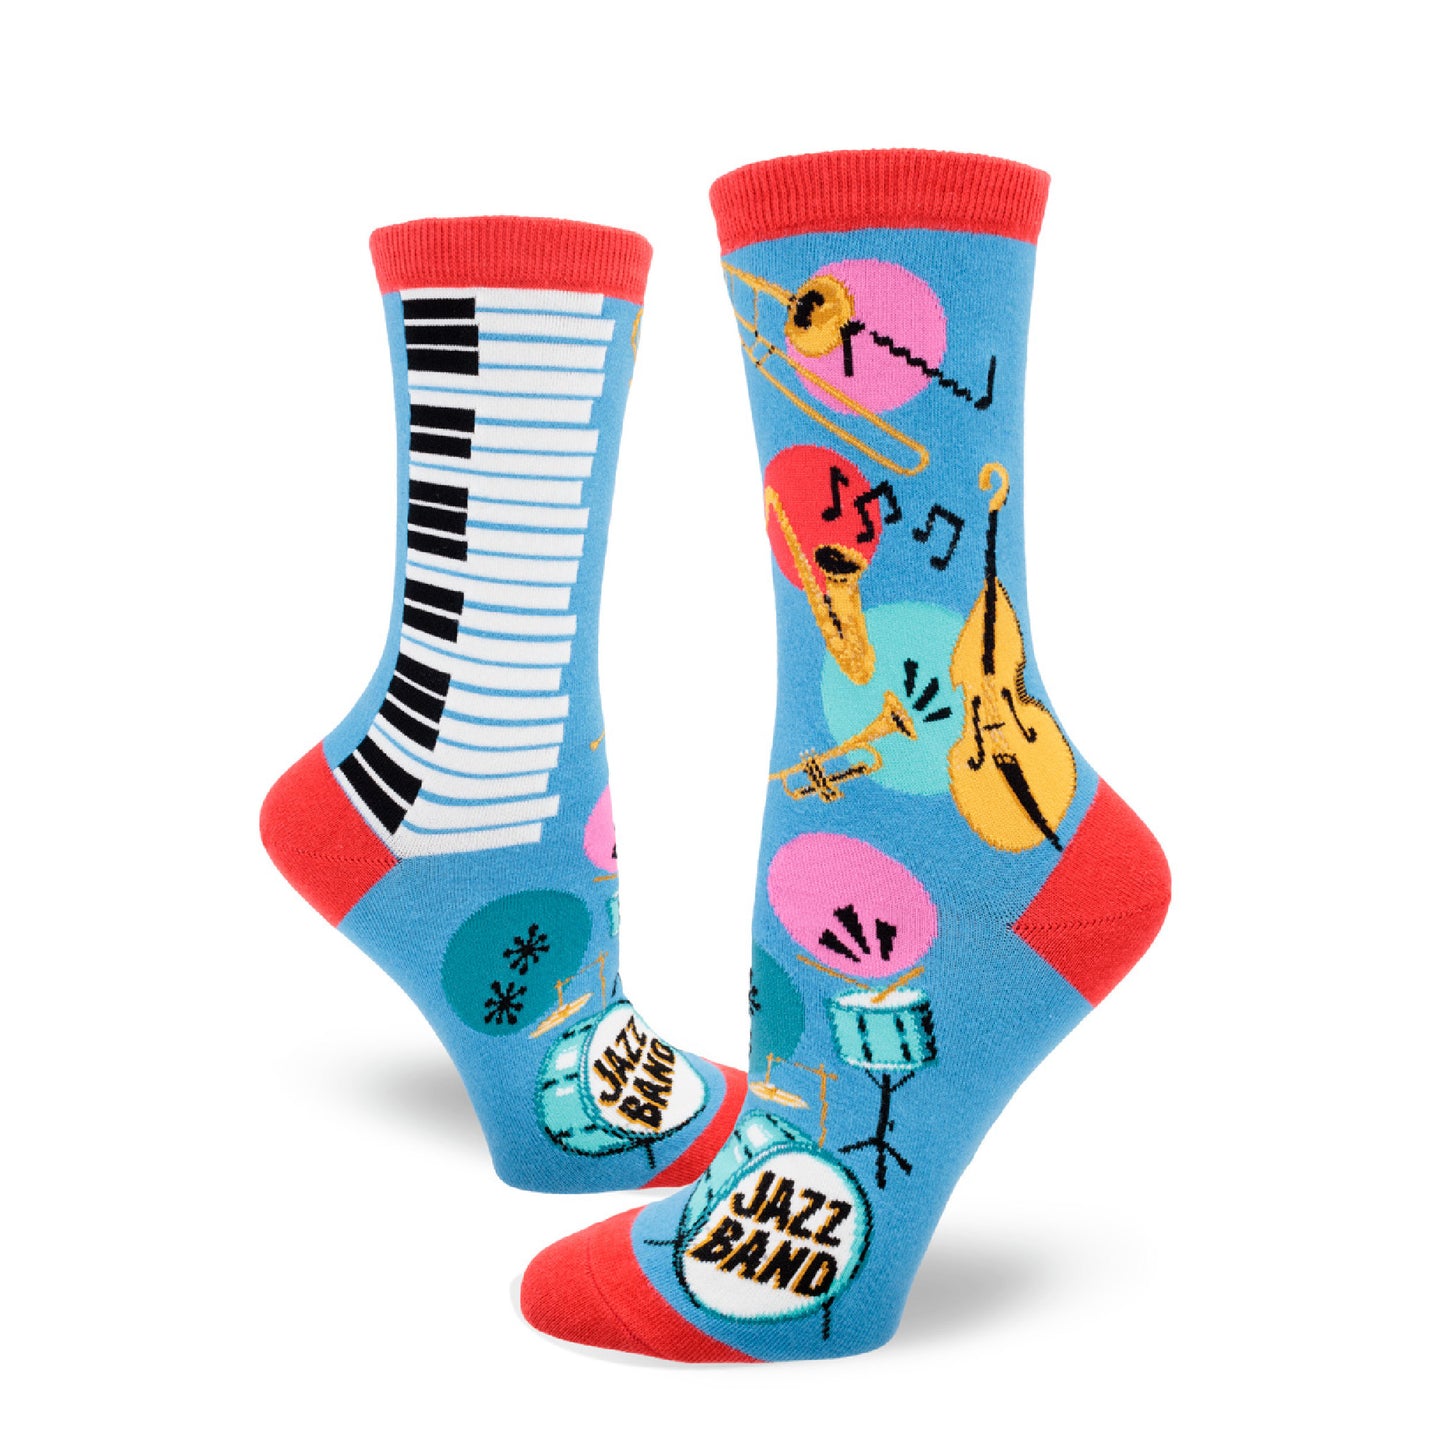 Jazz Band Women’s Socks